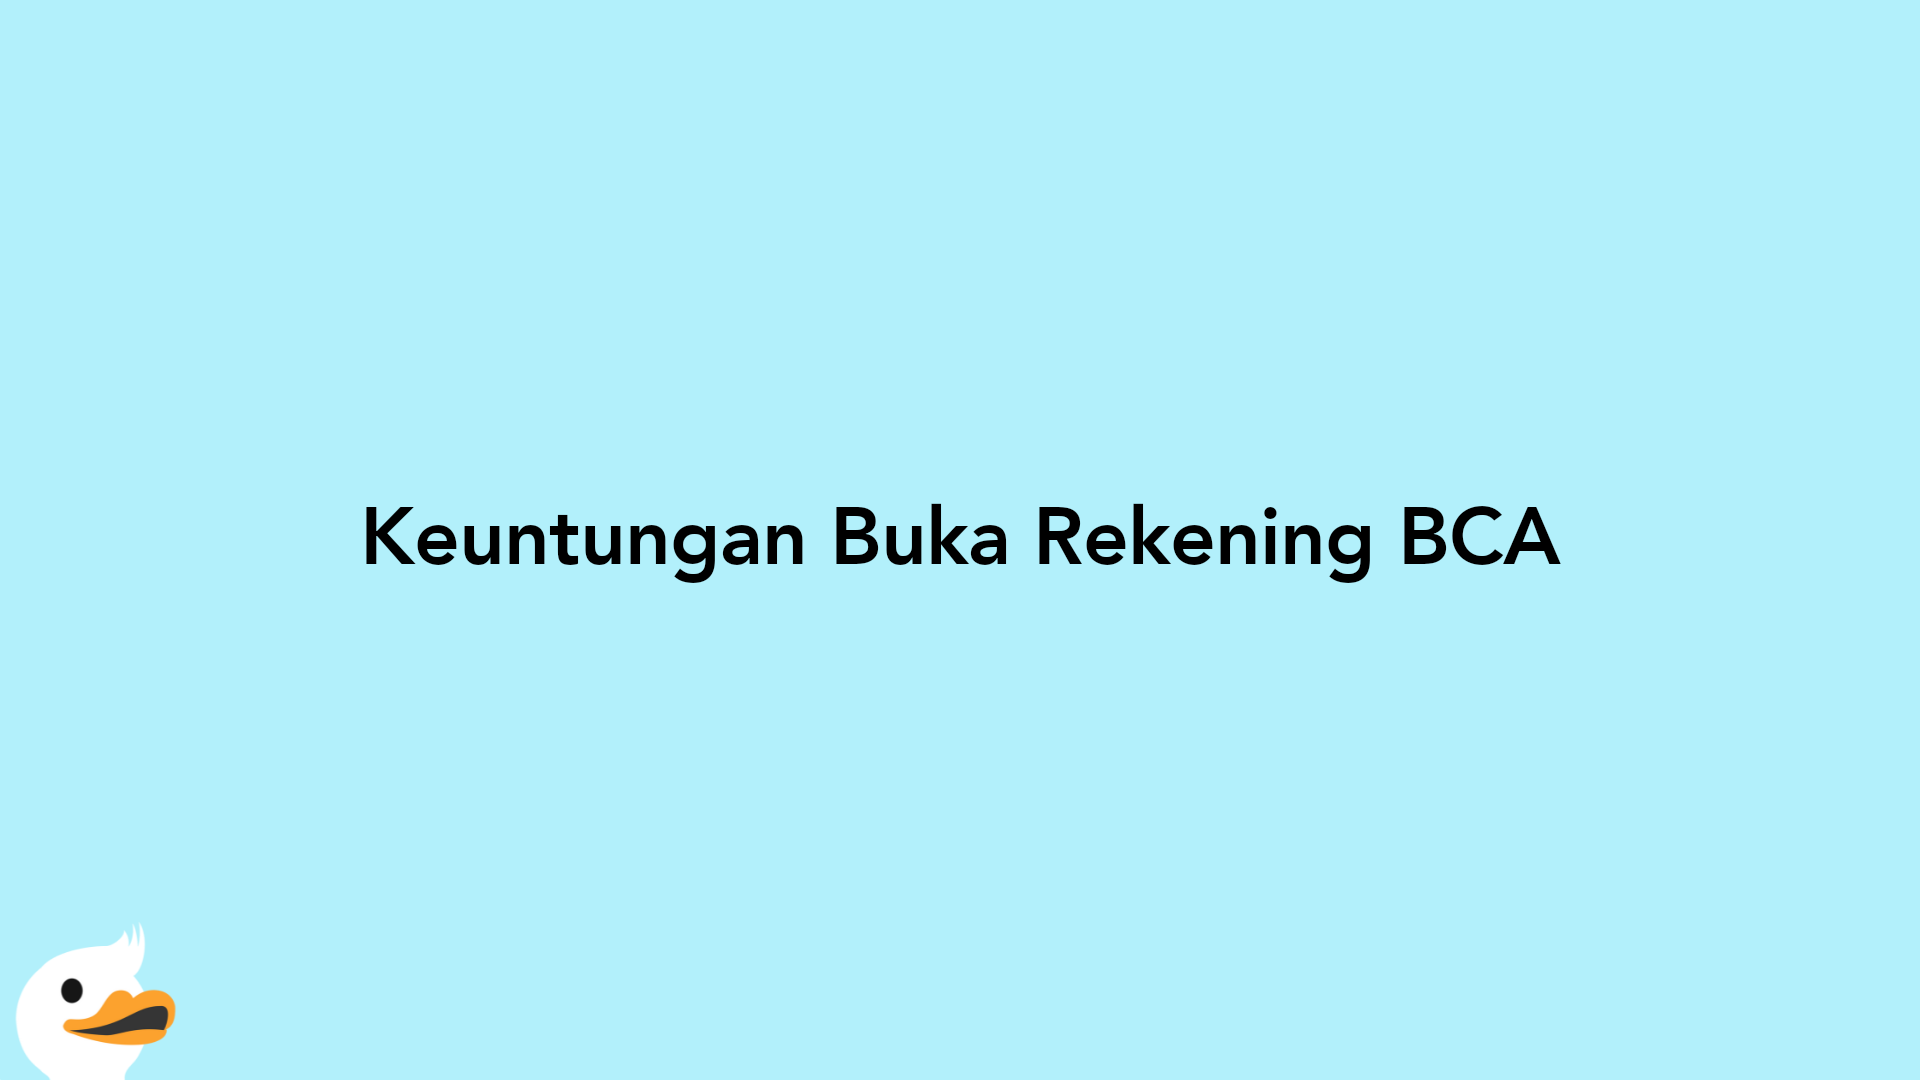 Keuntungan Buka Rekening BCA